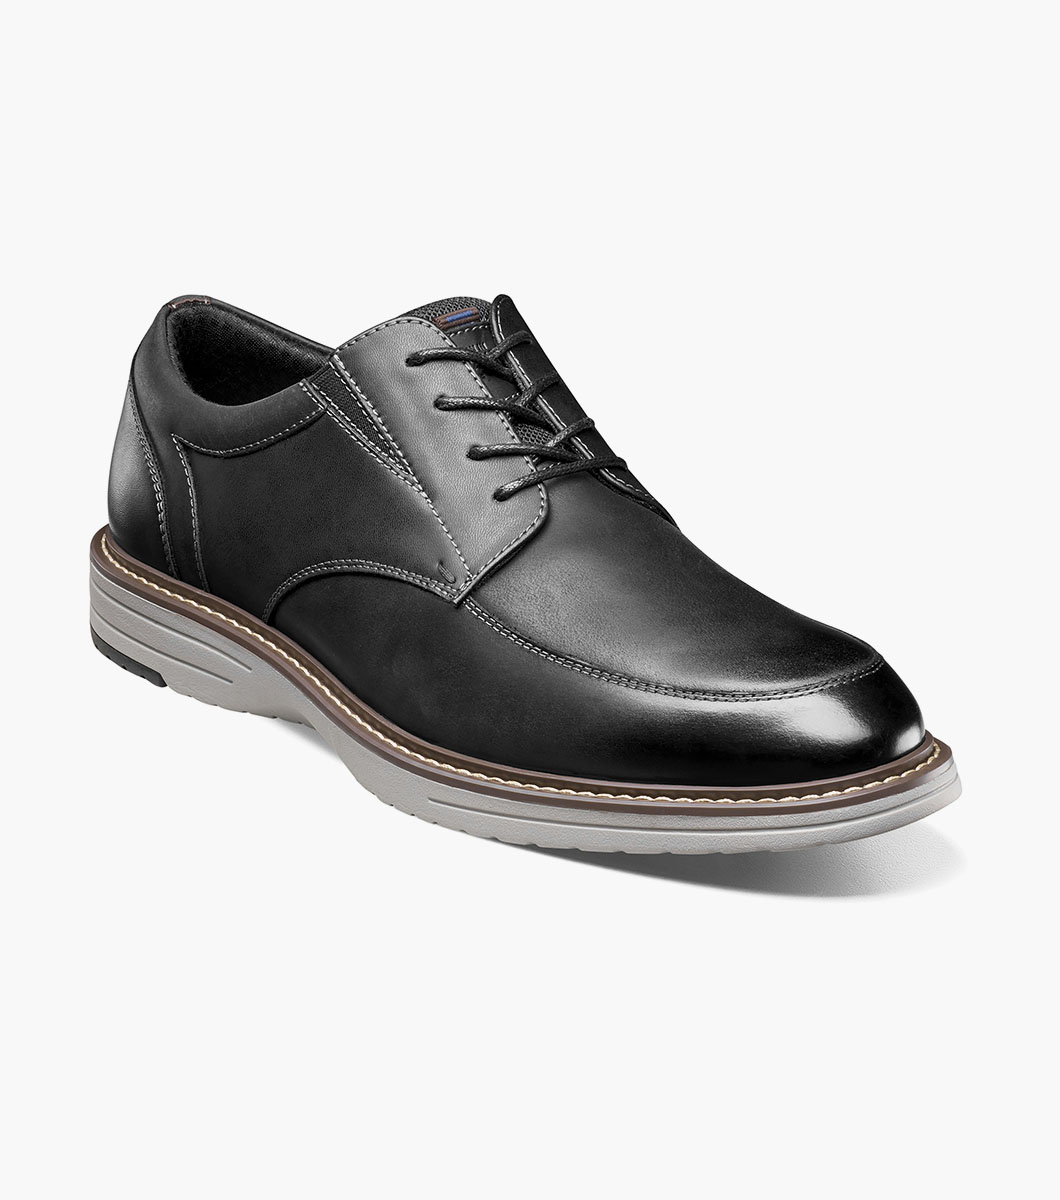 Nunn Bush Shoes Griff Moc Toe Oxford Black Multi Size 12